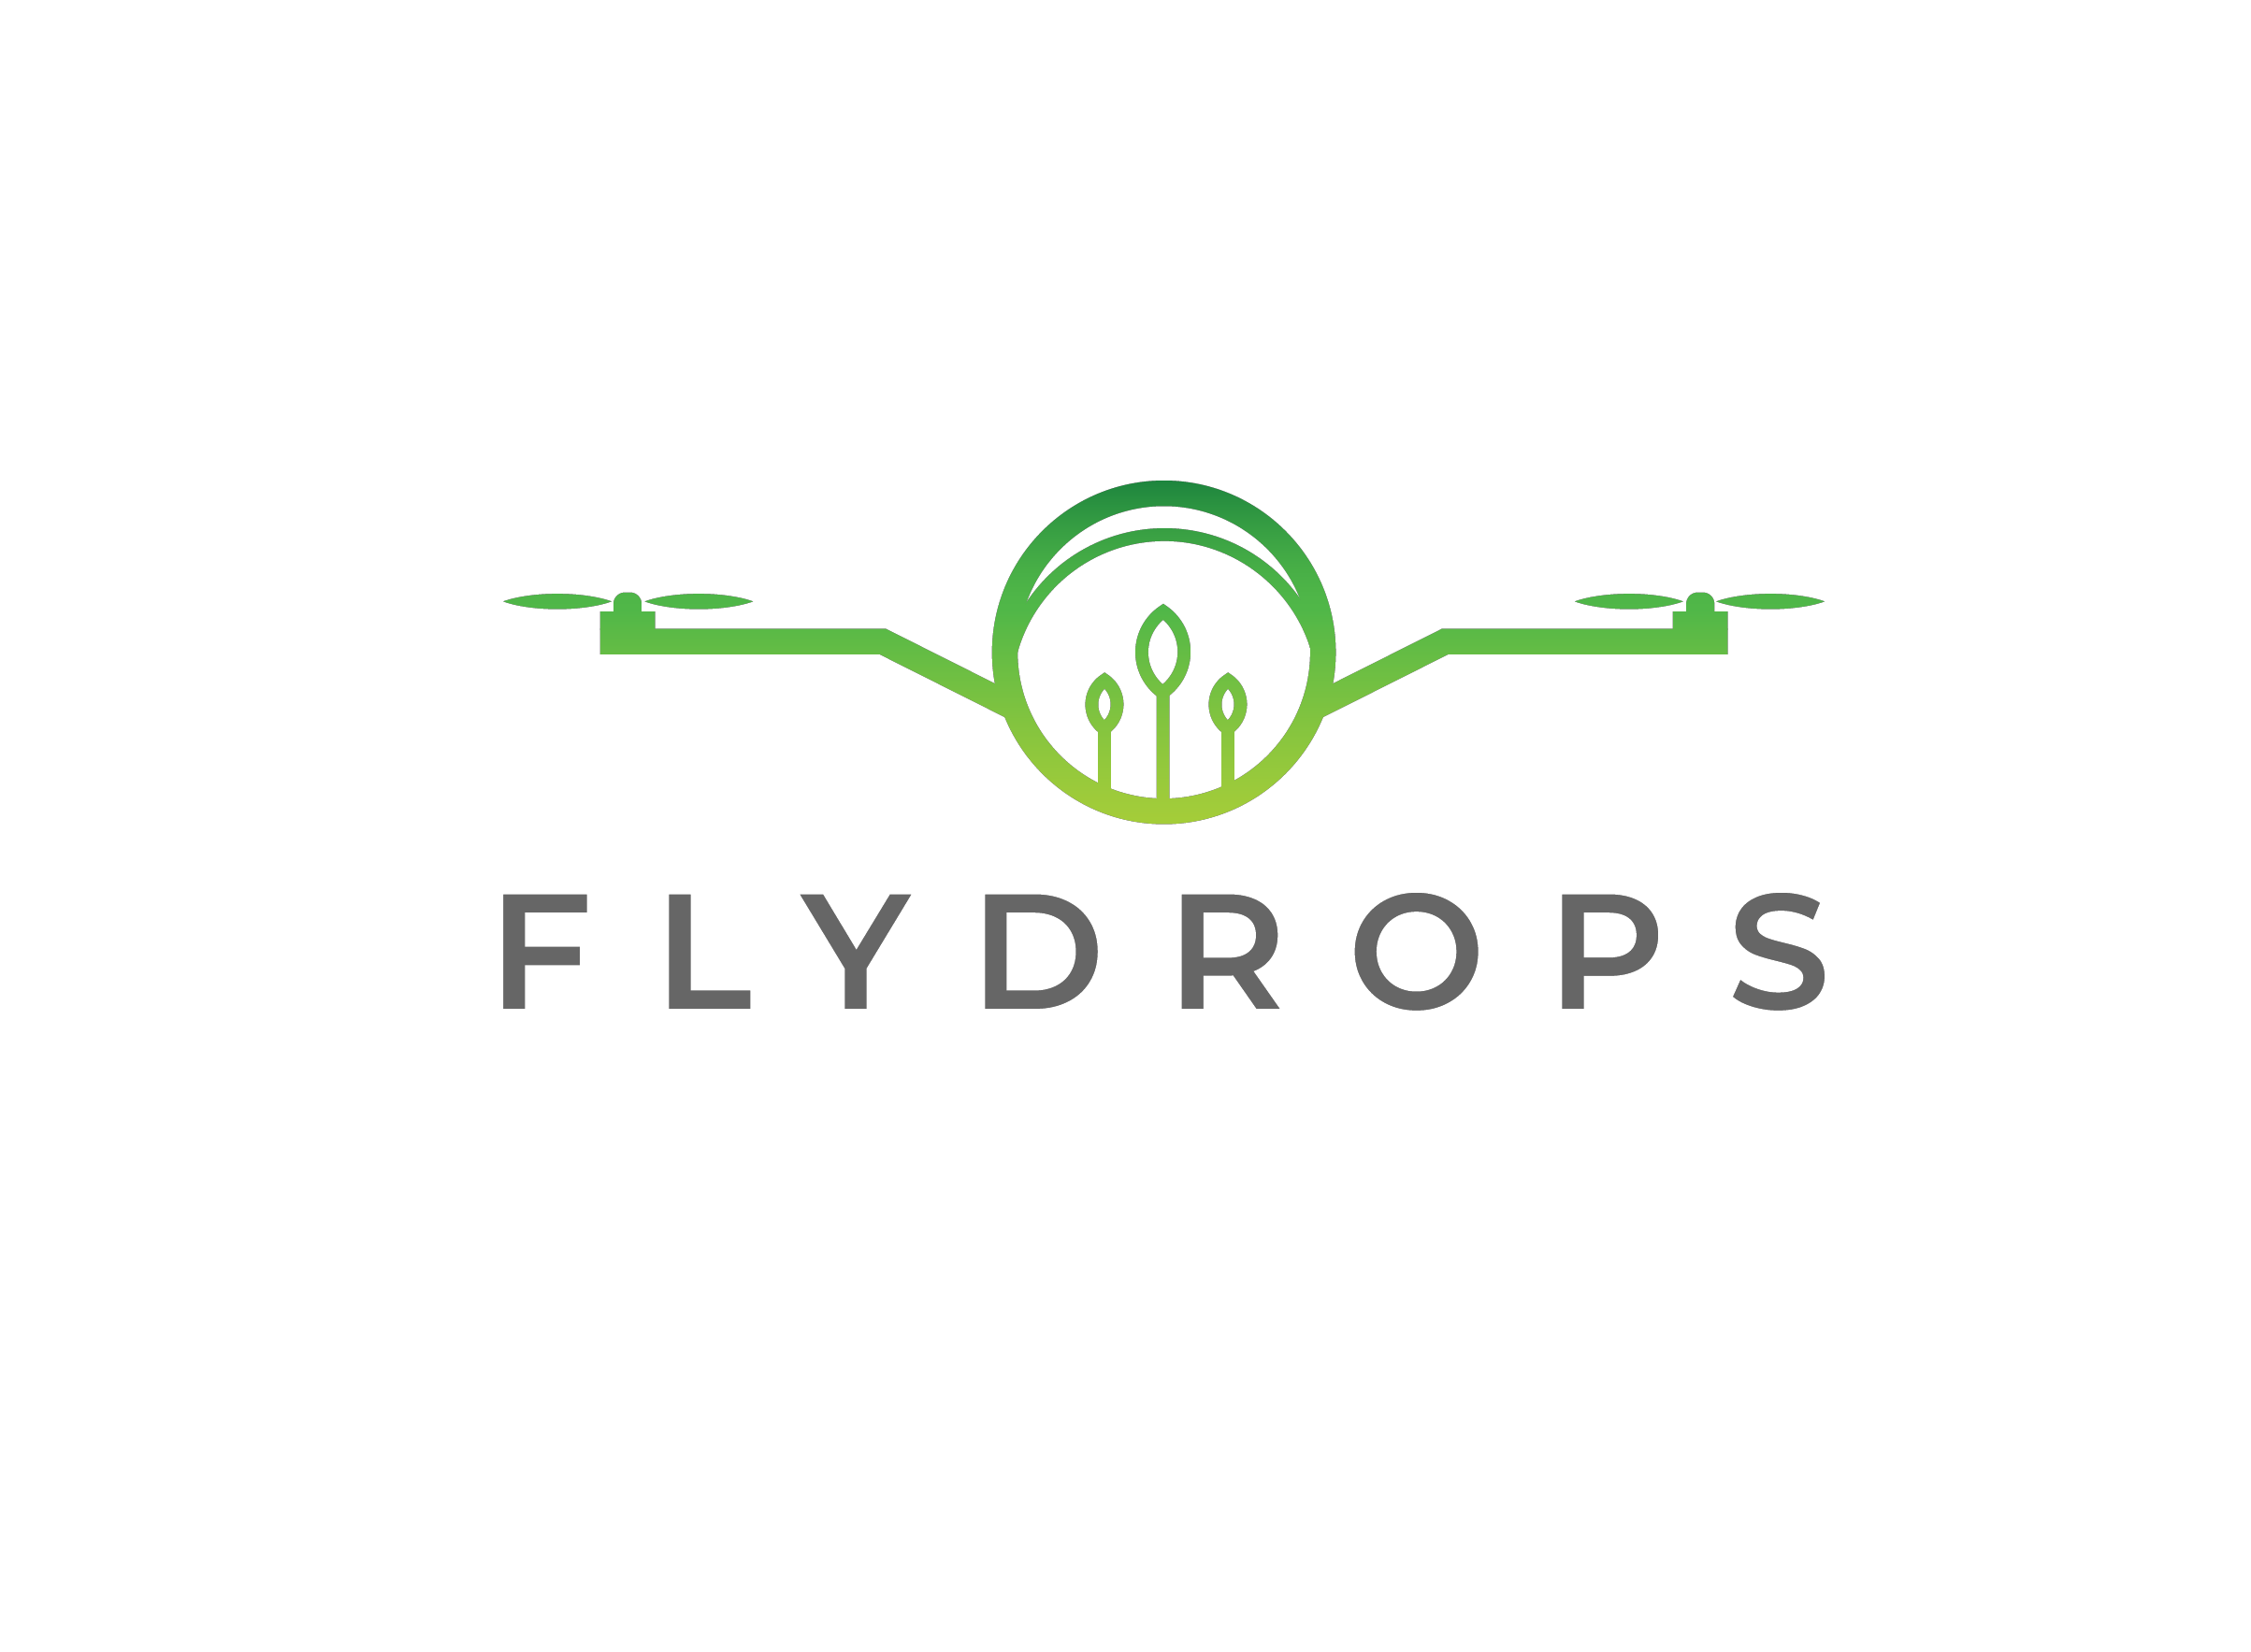 FLYDROPS logo